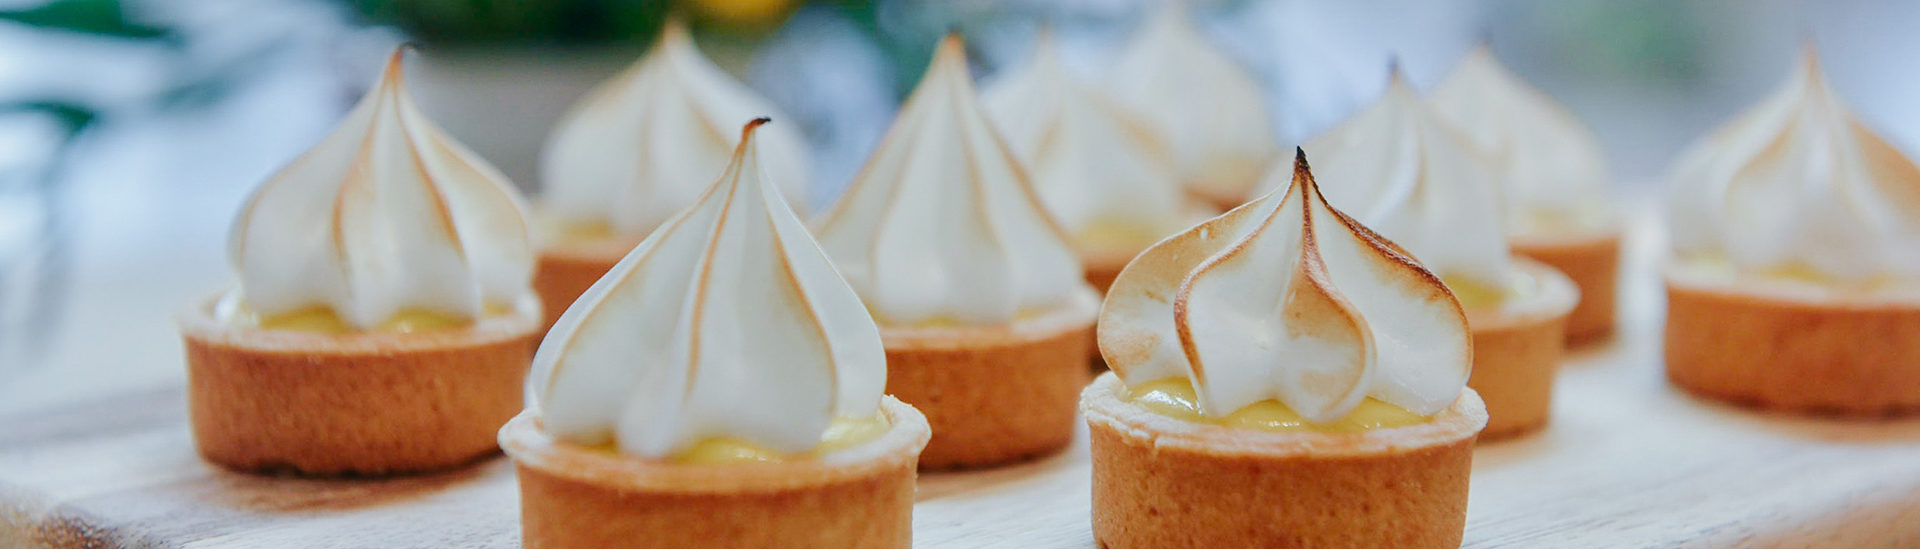 multiple mini lemon meringue tarts on a wooden board